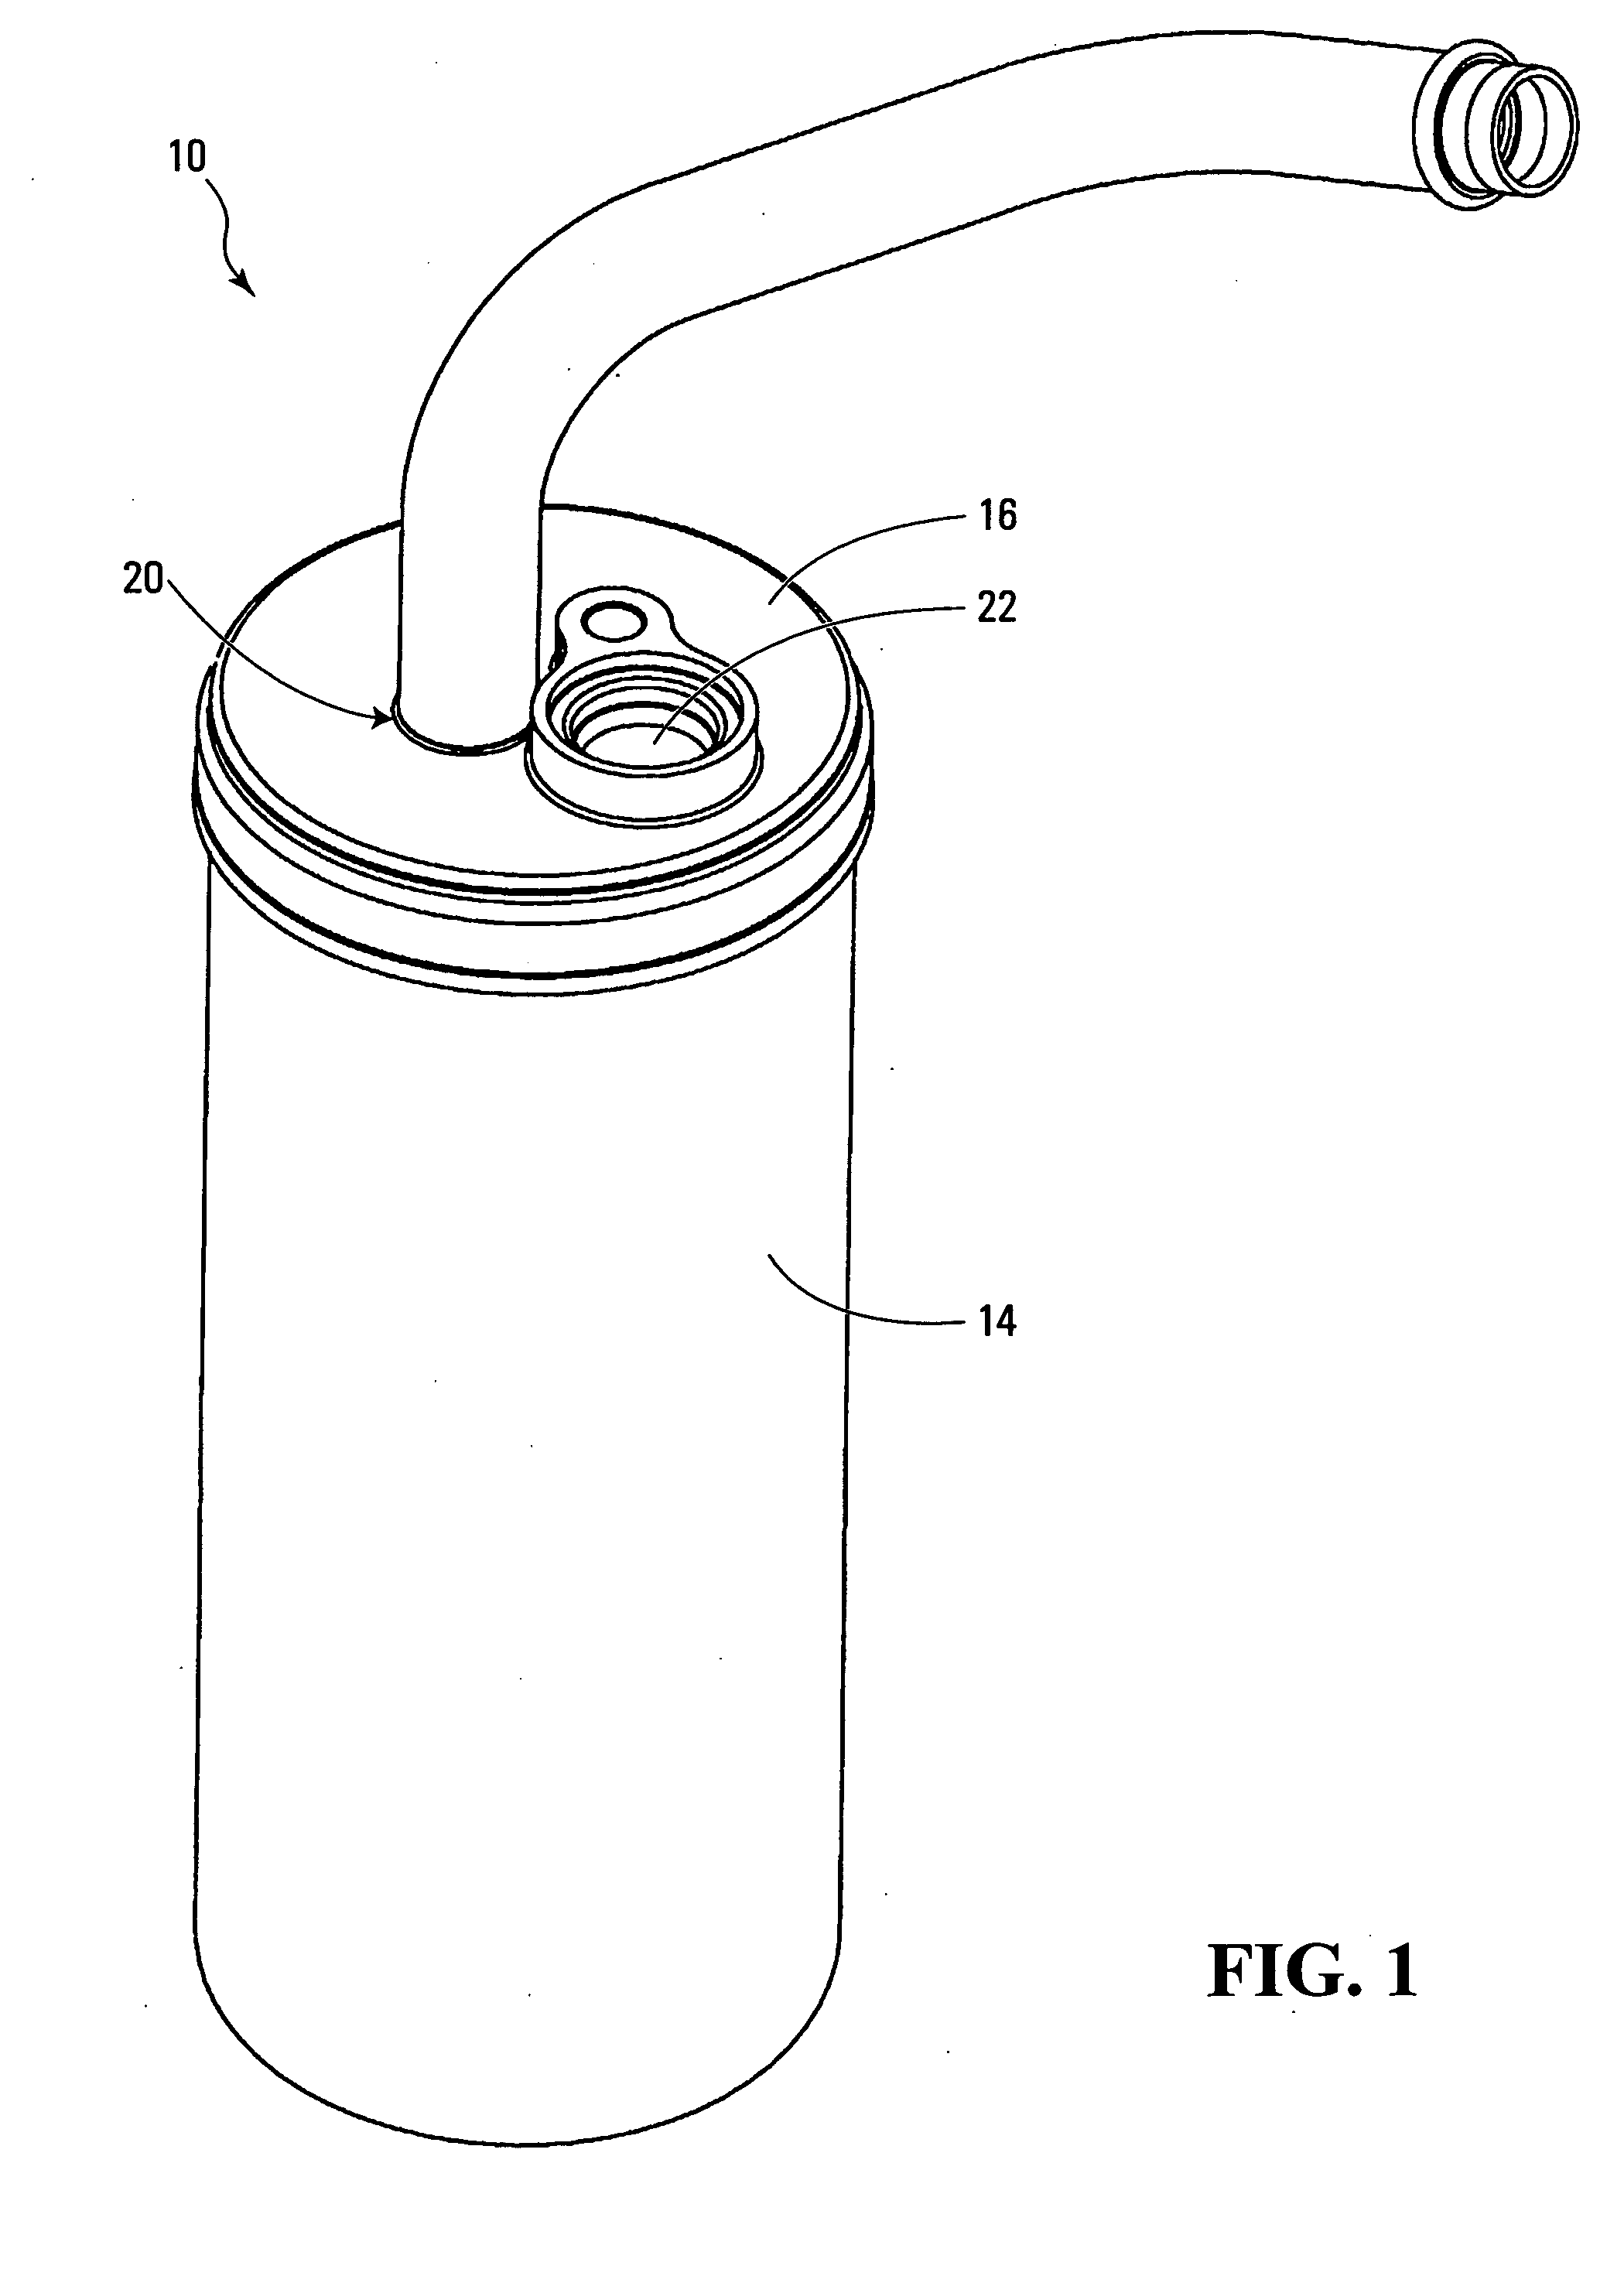 Accumulator with full-flow filtering